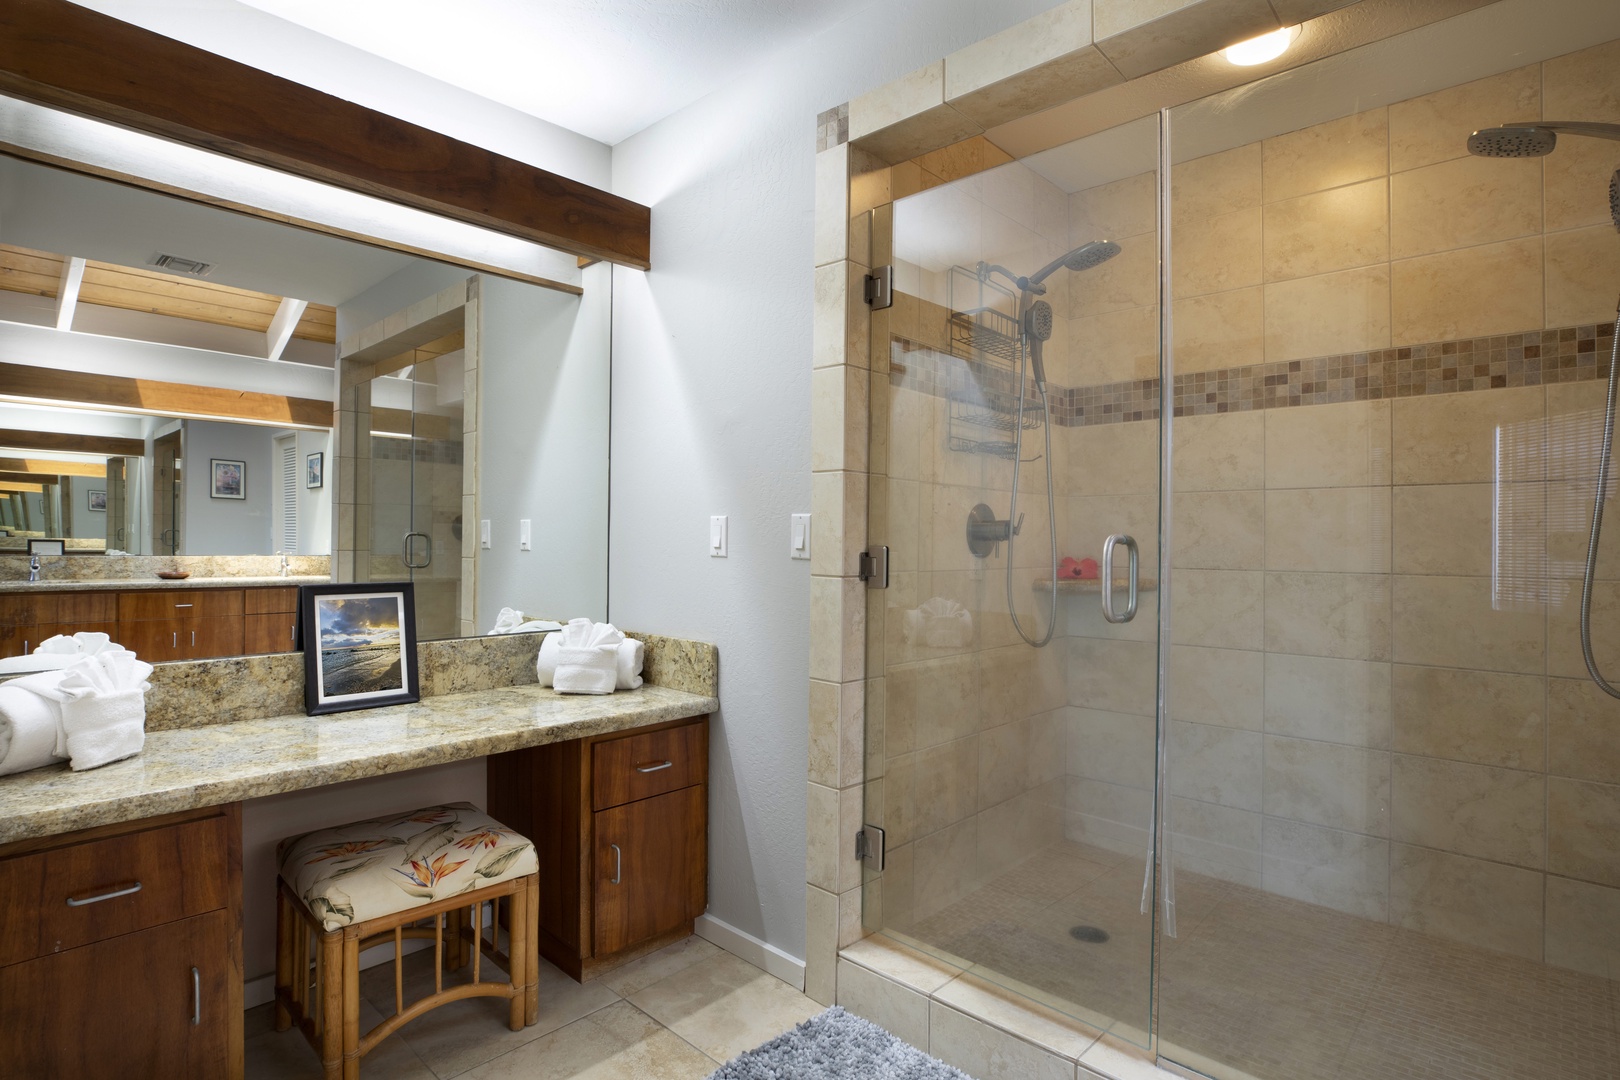 Bathroom #1 Shower and Tub En-Suite to Bedroom #1